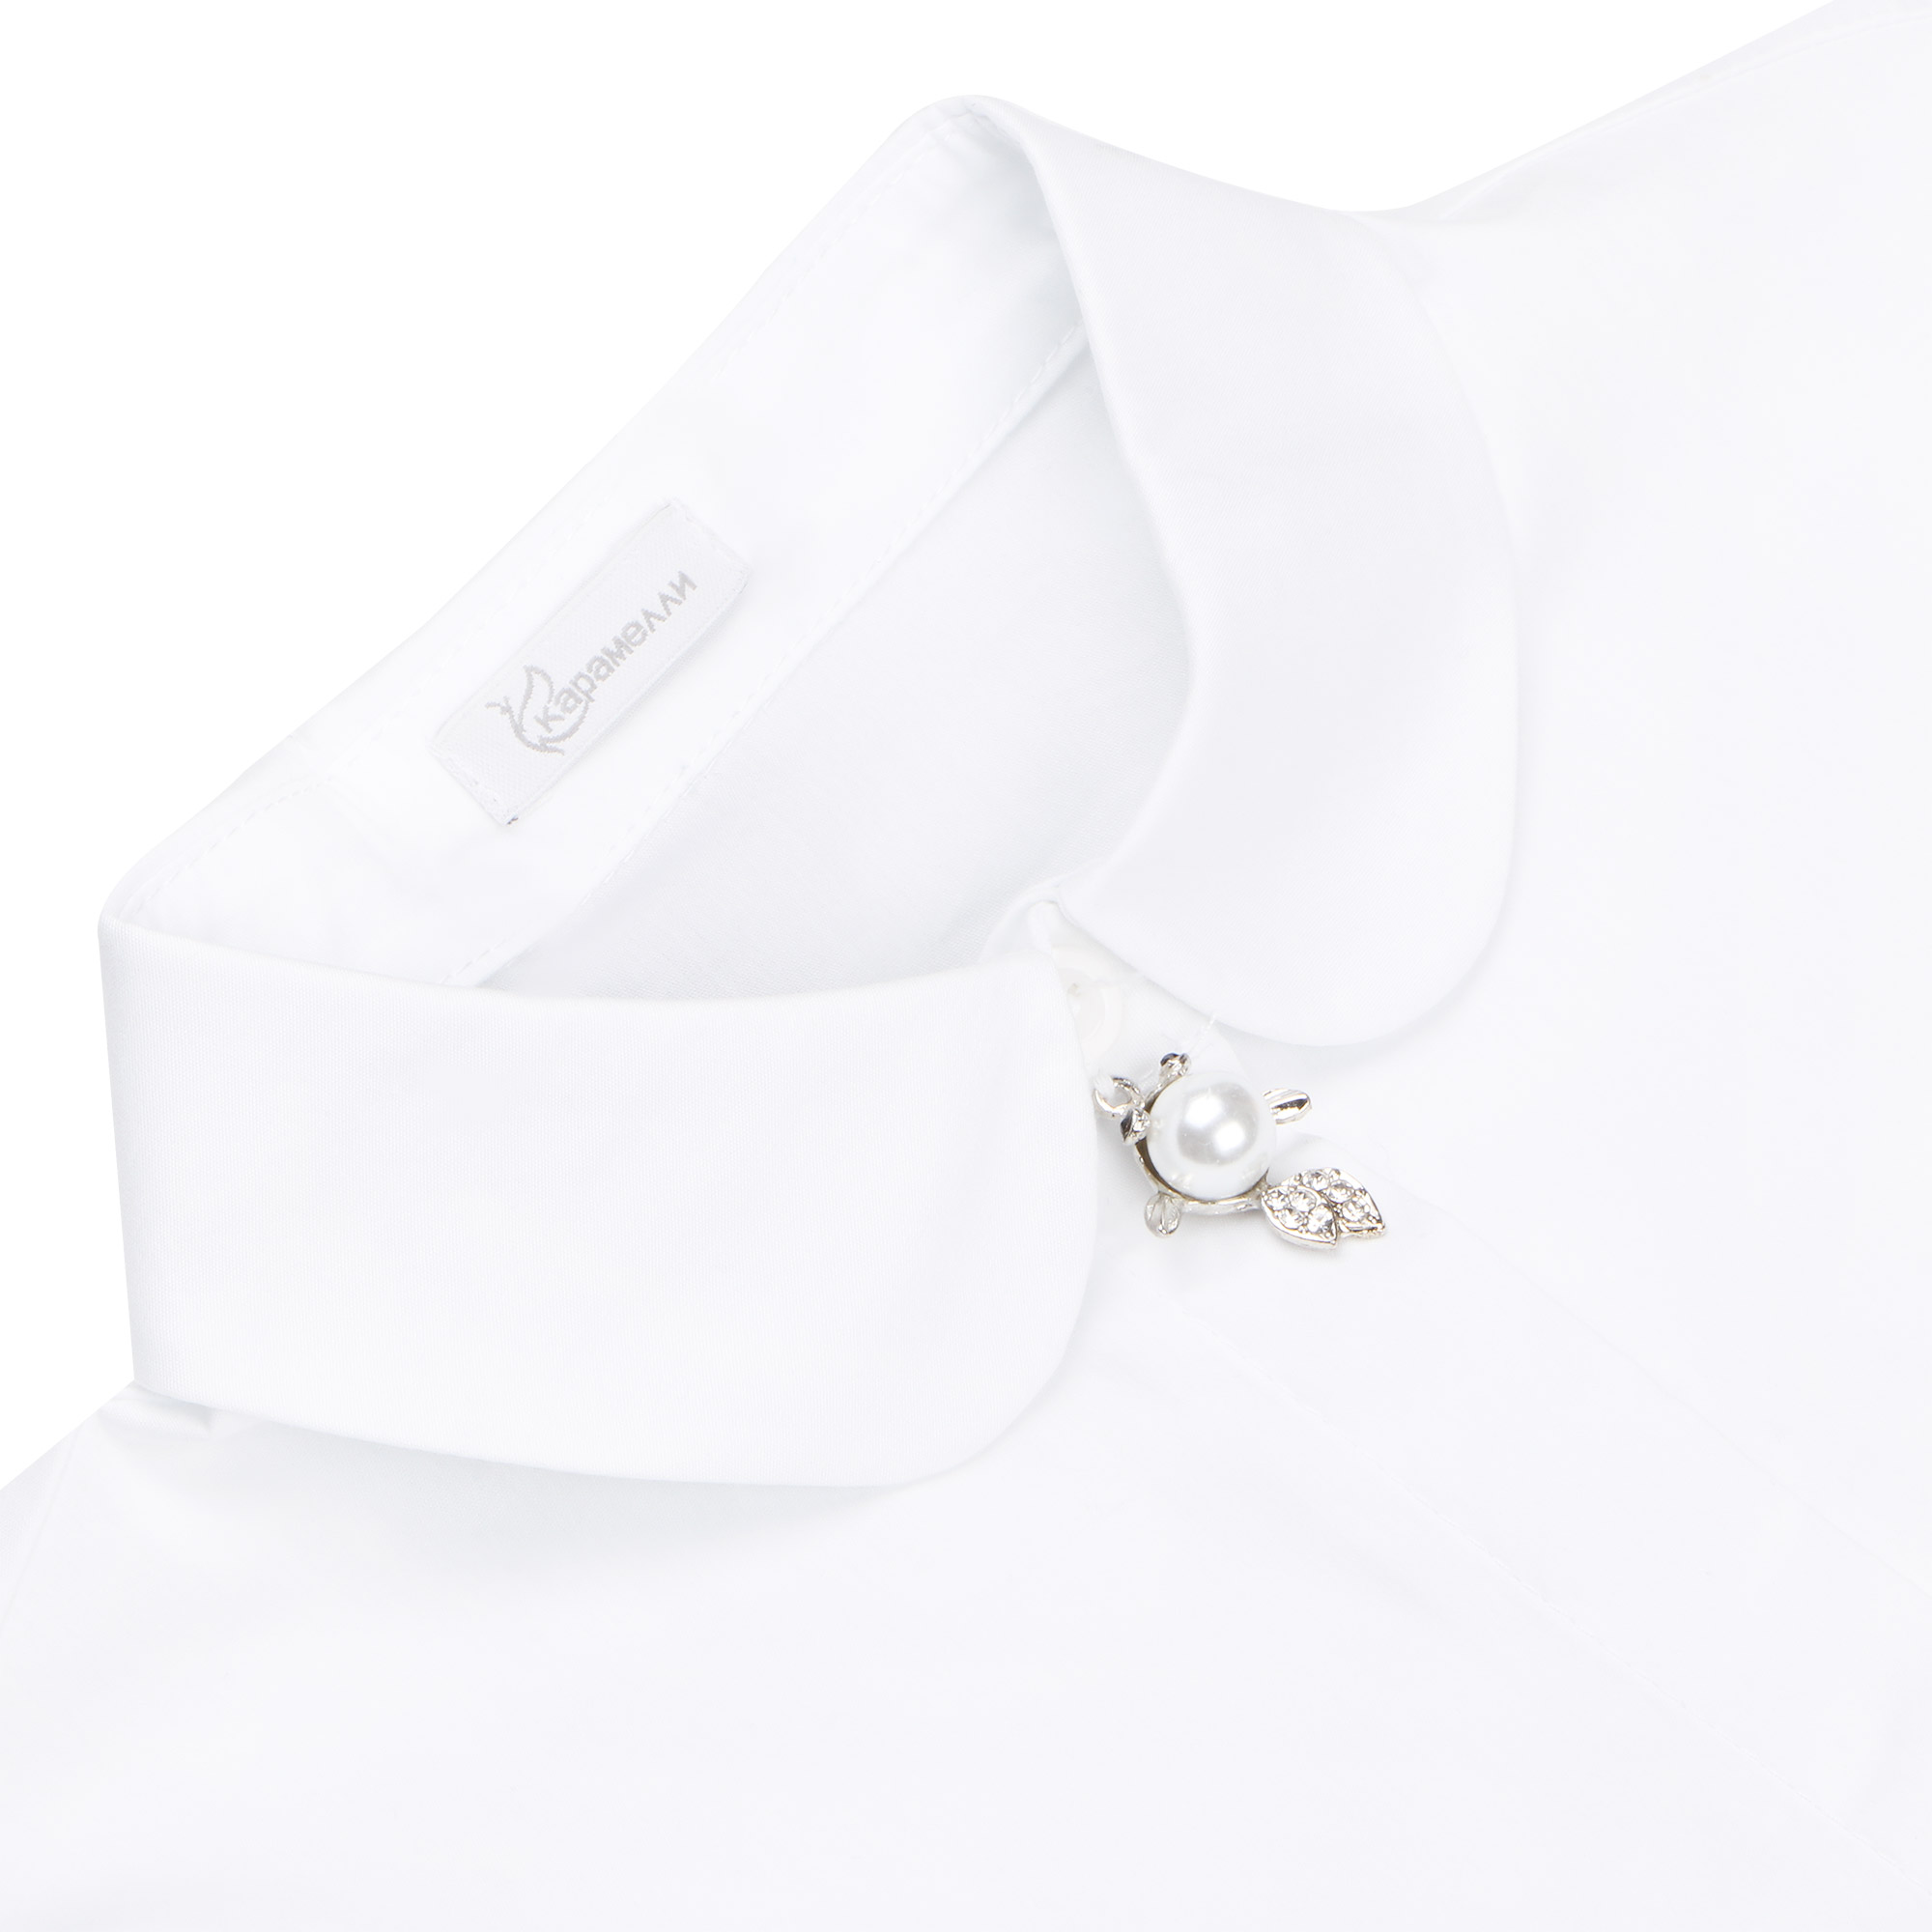 Блузка школьная КАРАМЕЛЛИ О74161 белая 134, цвет белый, размер 134 - фото 2